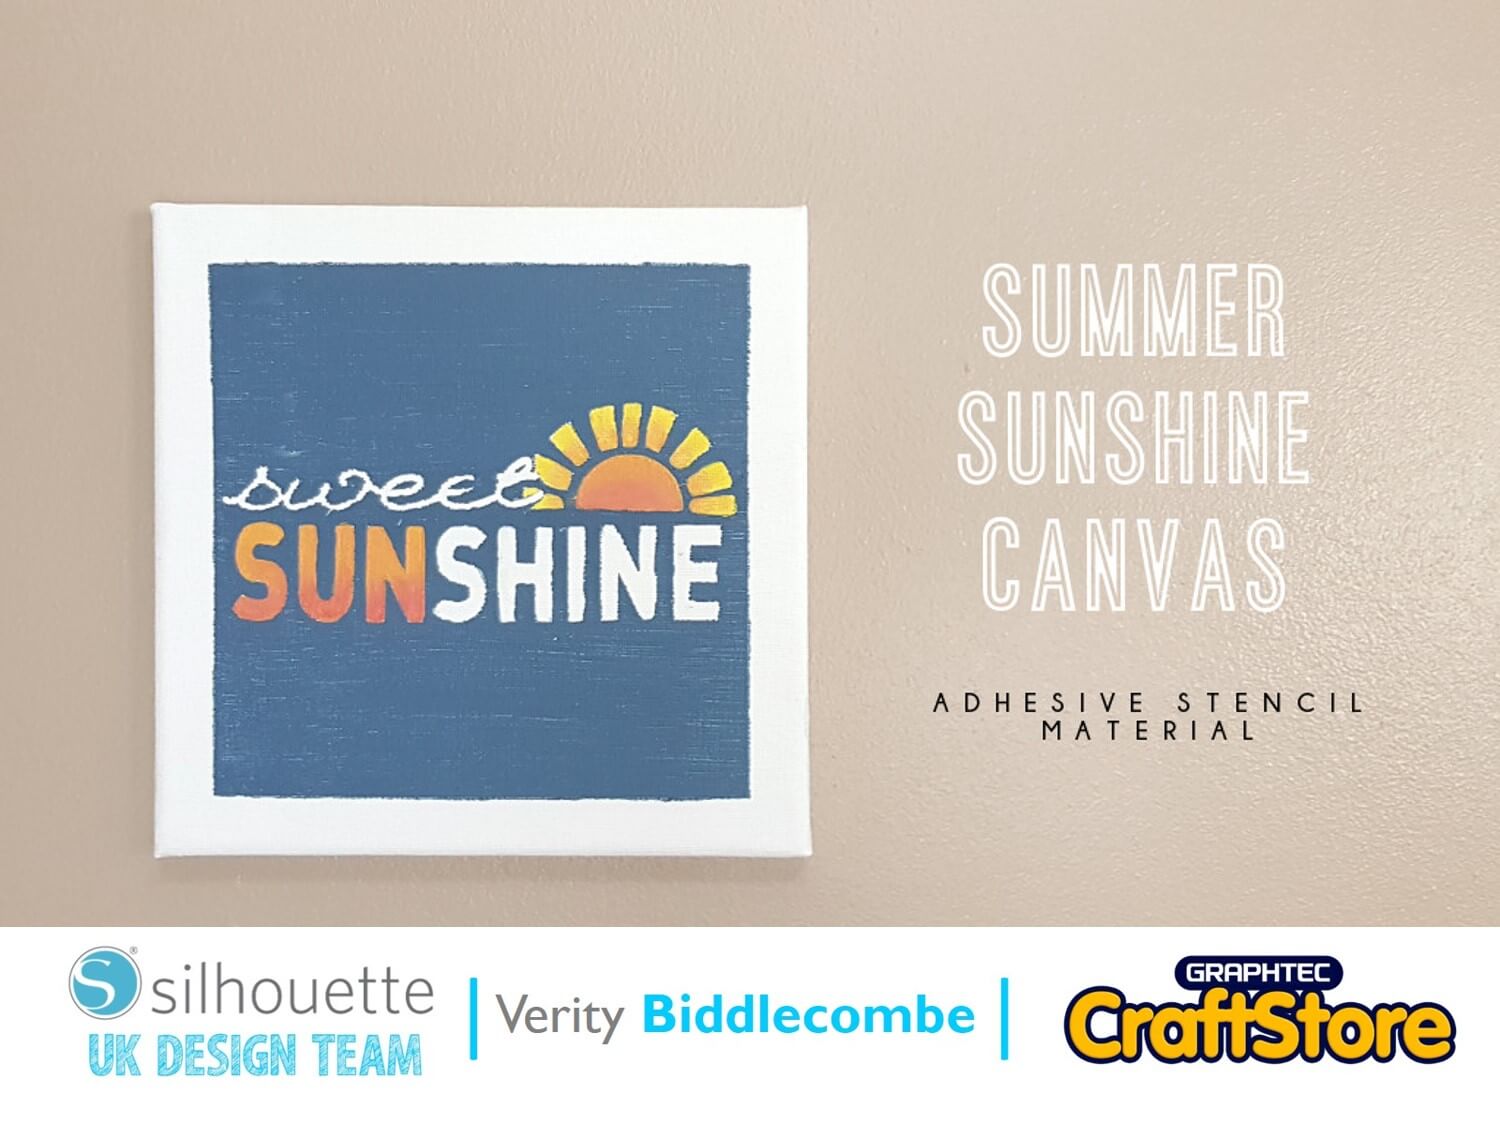 silhouette uk blog - verity biddlecombe - summer sunshine canvas - main